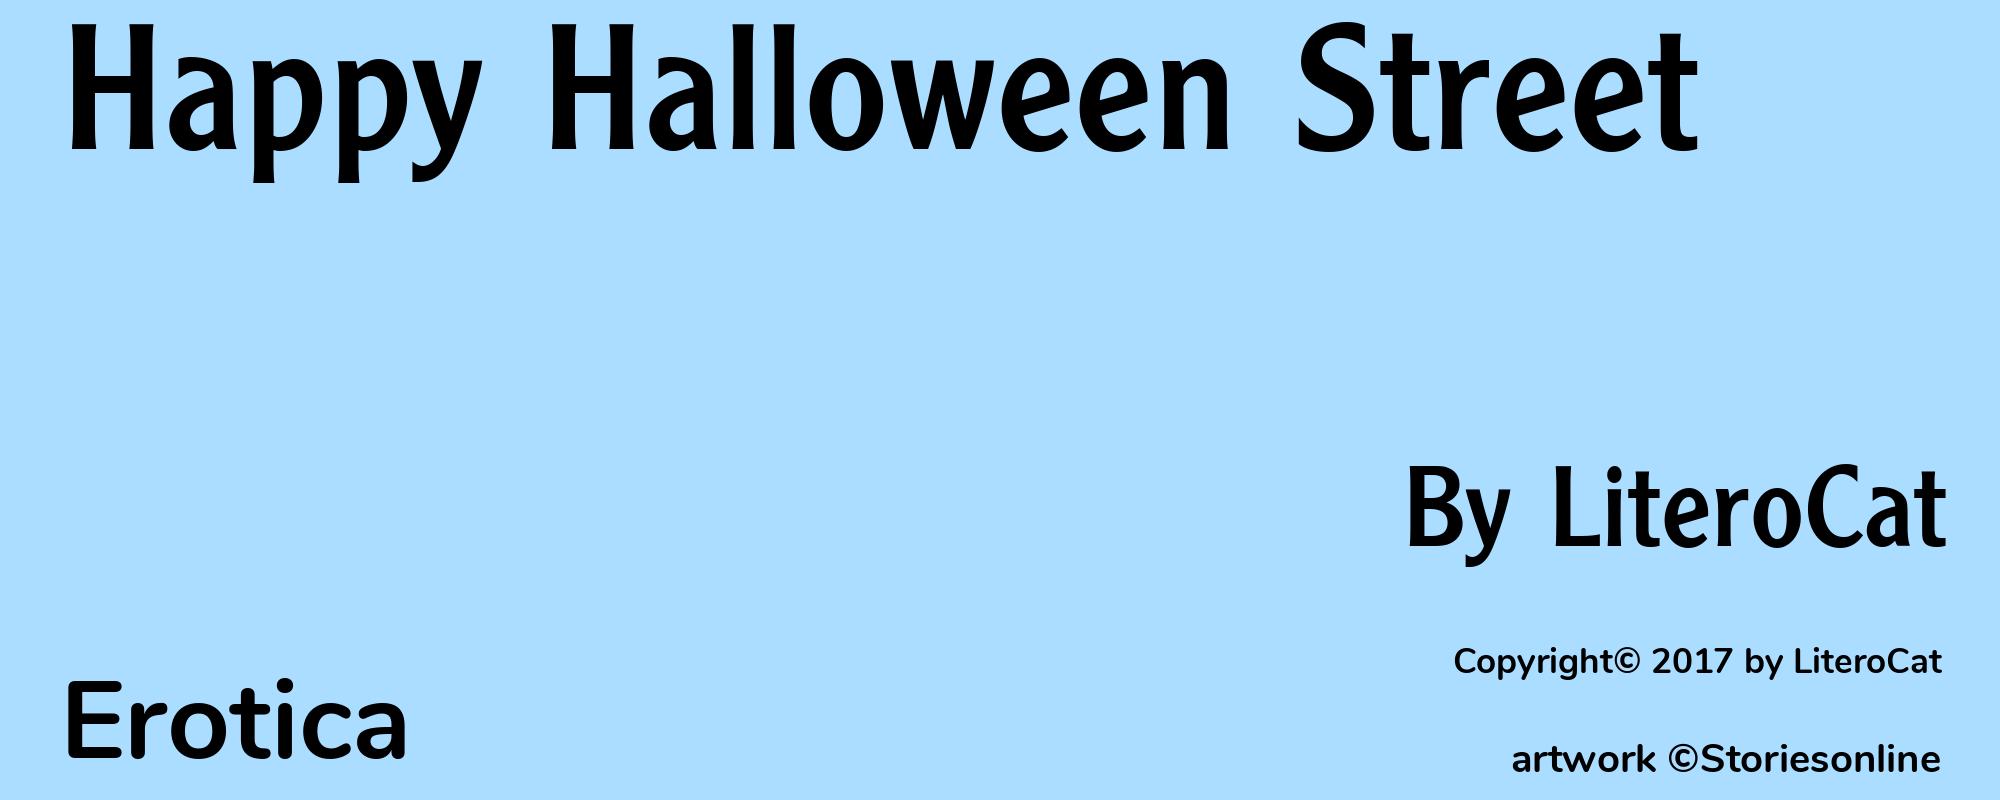 Happy Halloween Street - Cover